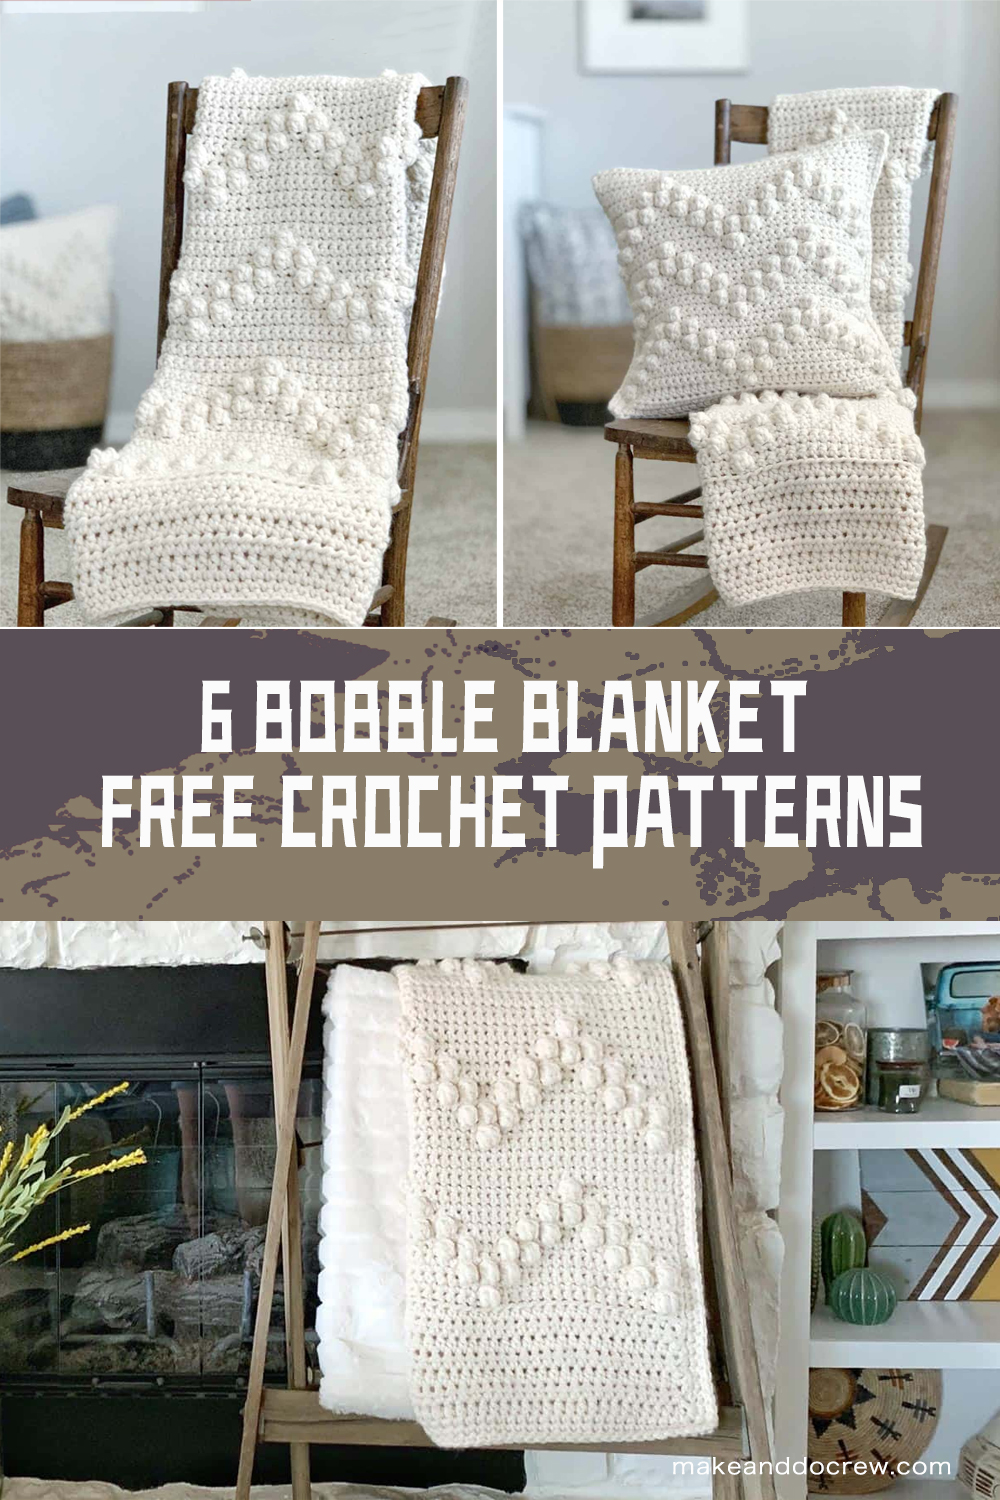  6 FREE Crochet Bobble Blanket Patterns 5: BLUE BOBBLE BABY BLANKET FREE Pattern